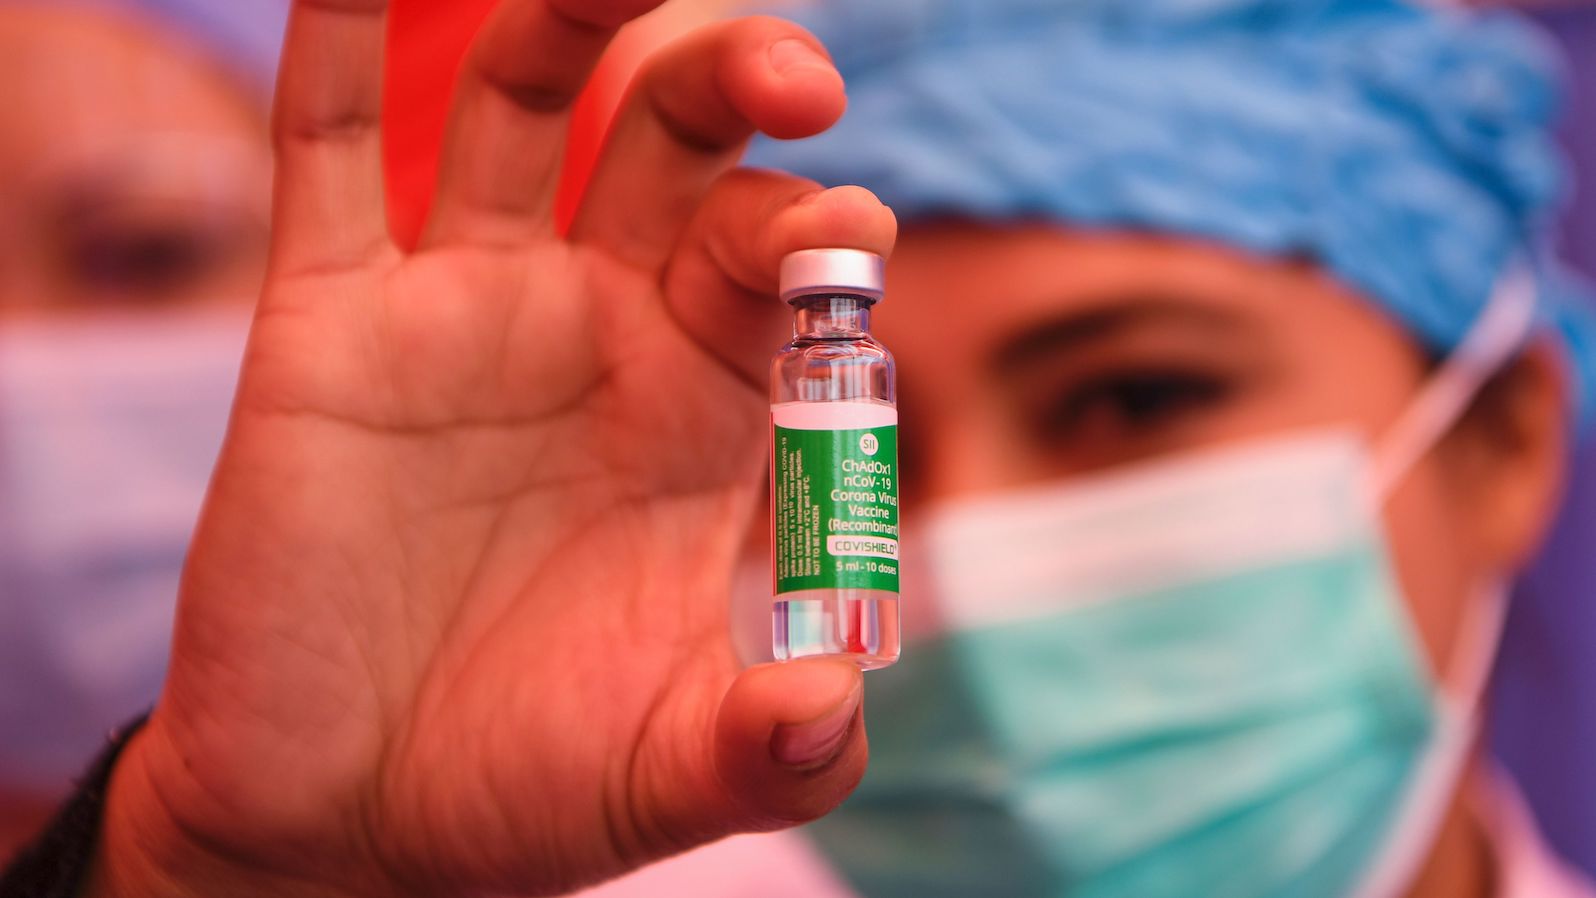 AstraZeneca’s coronavirus vaccine could reduce disease transmission, new study finds